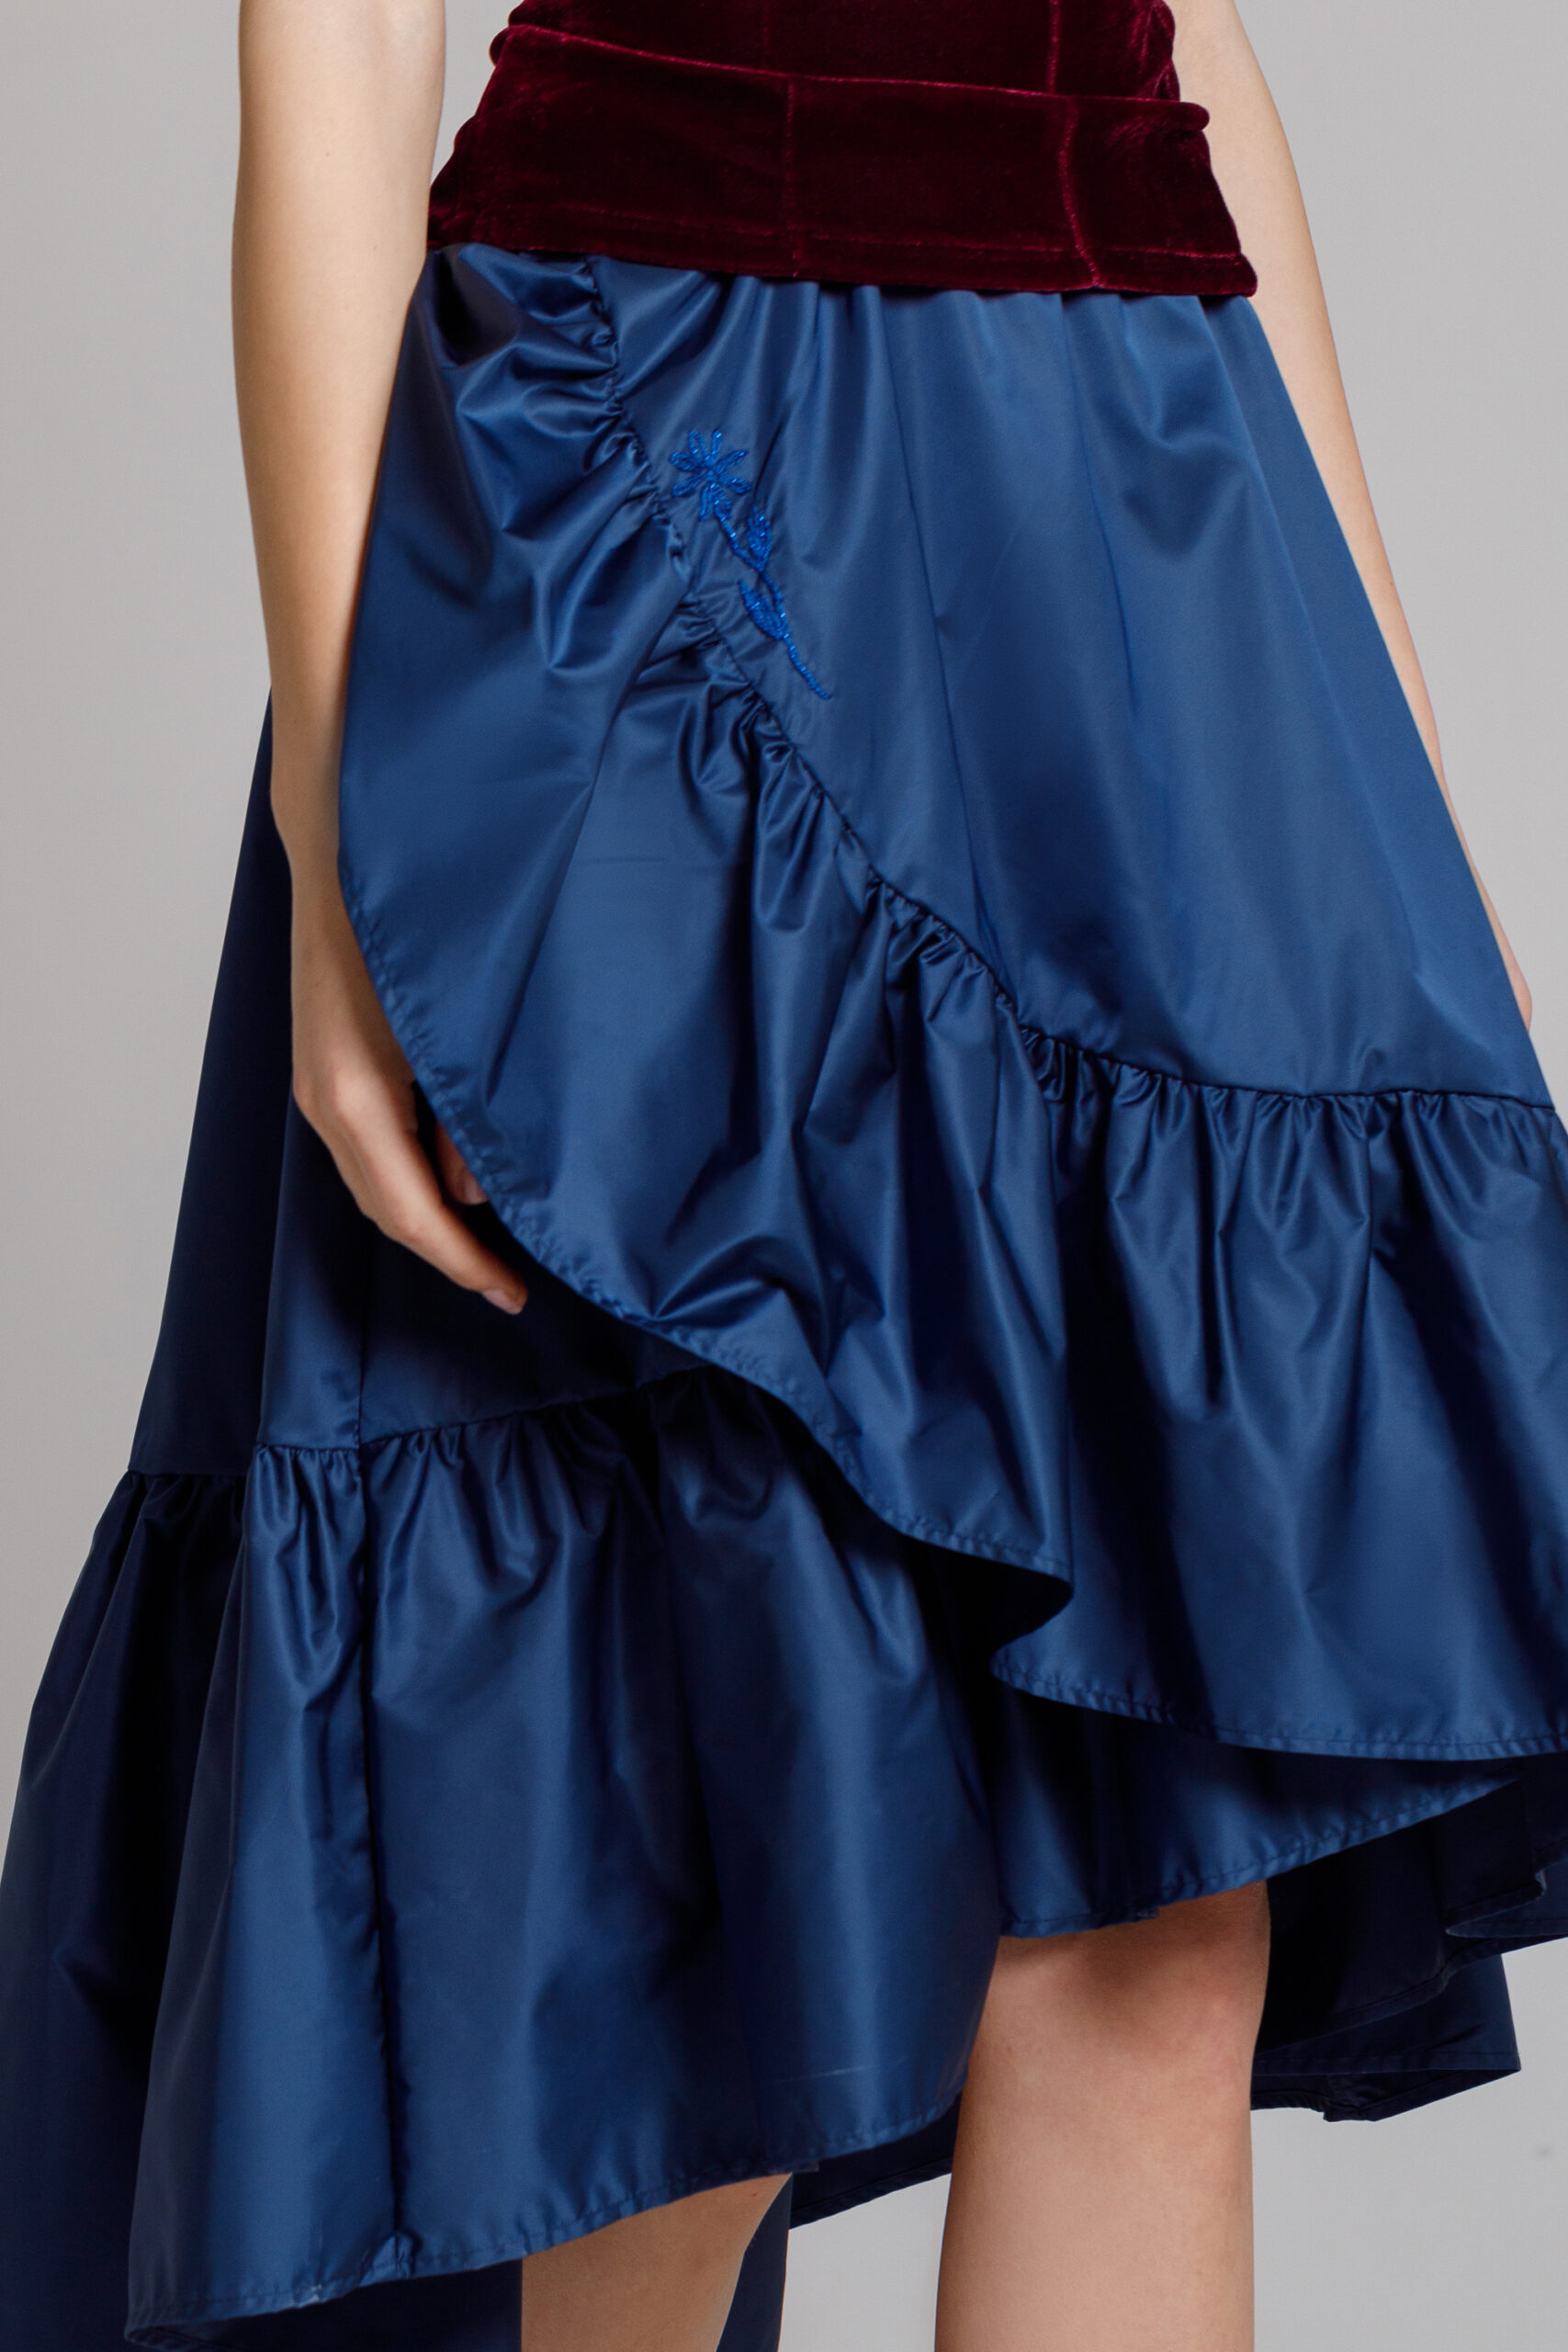 LAYLA blue skirt. Natural fabrics, original design, handmade embroidery